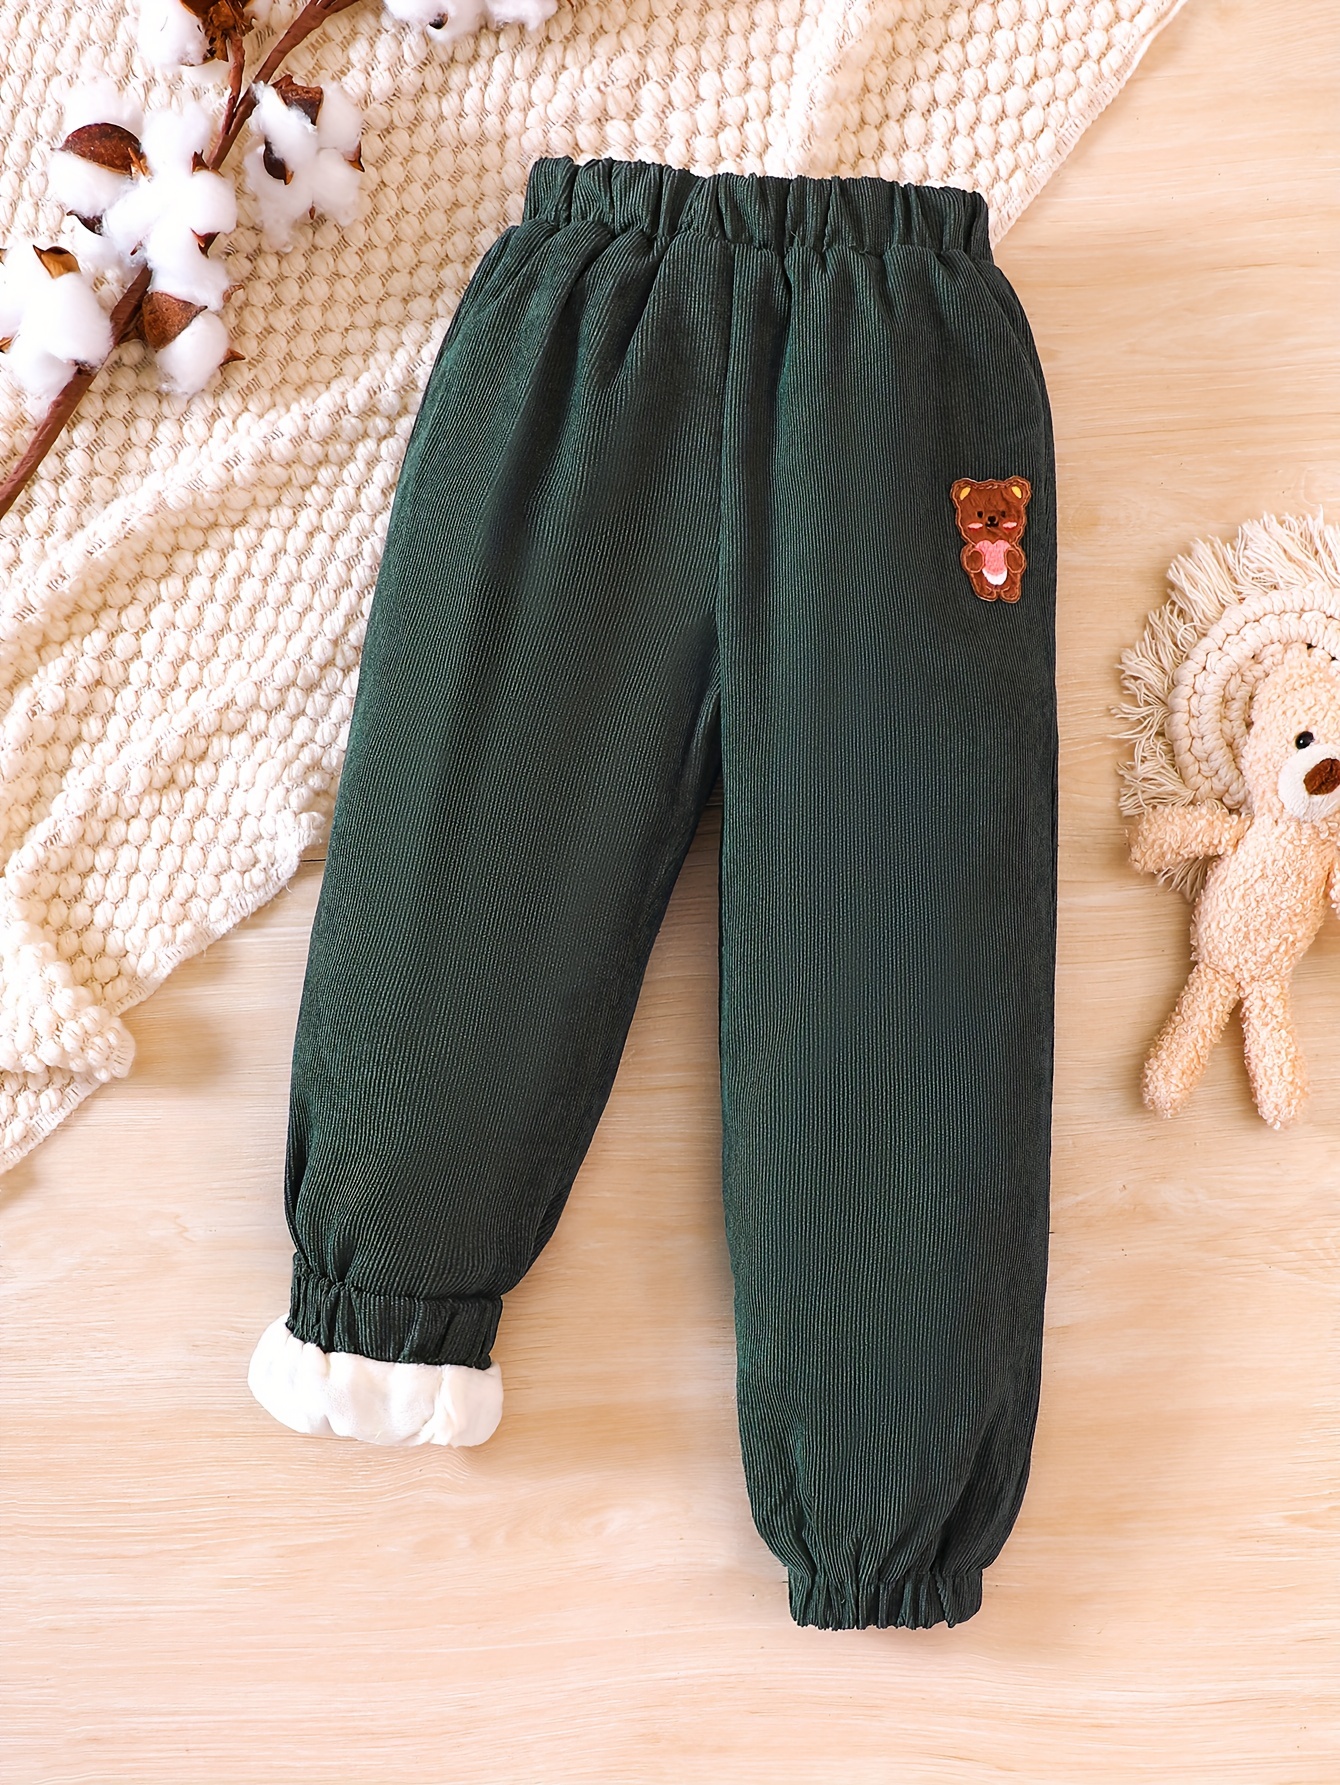 CuteOn Unisex Toddler Jogger Pants Kids Cotton Elastic Waist Winter Baby  Sweatpants Pants 1-5Years